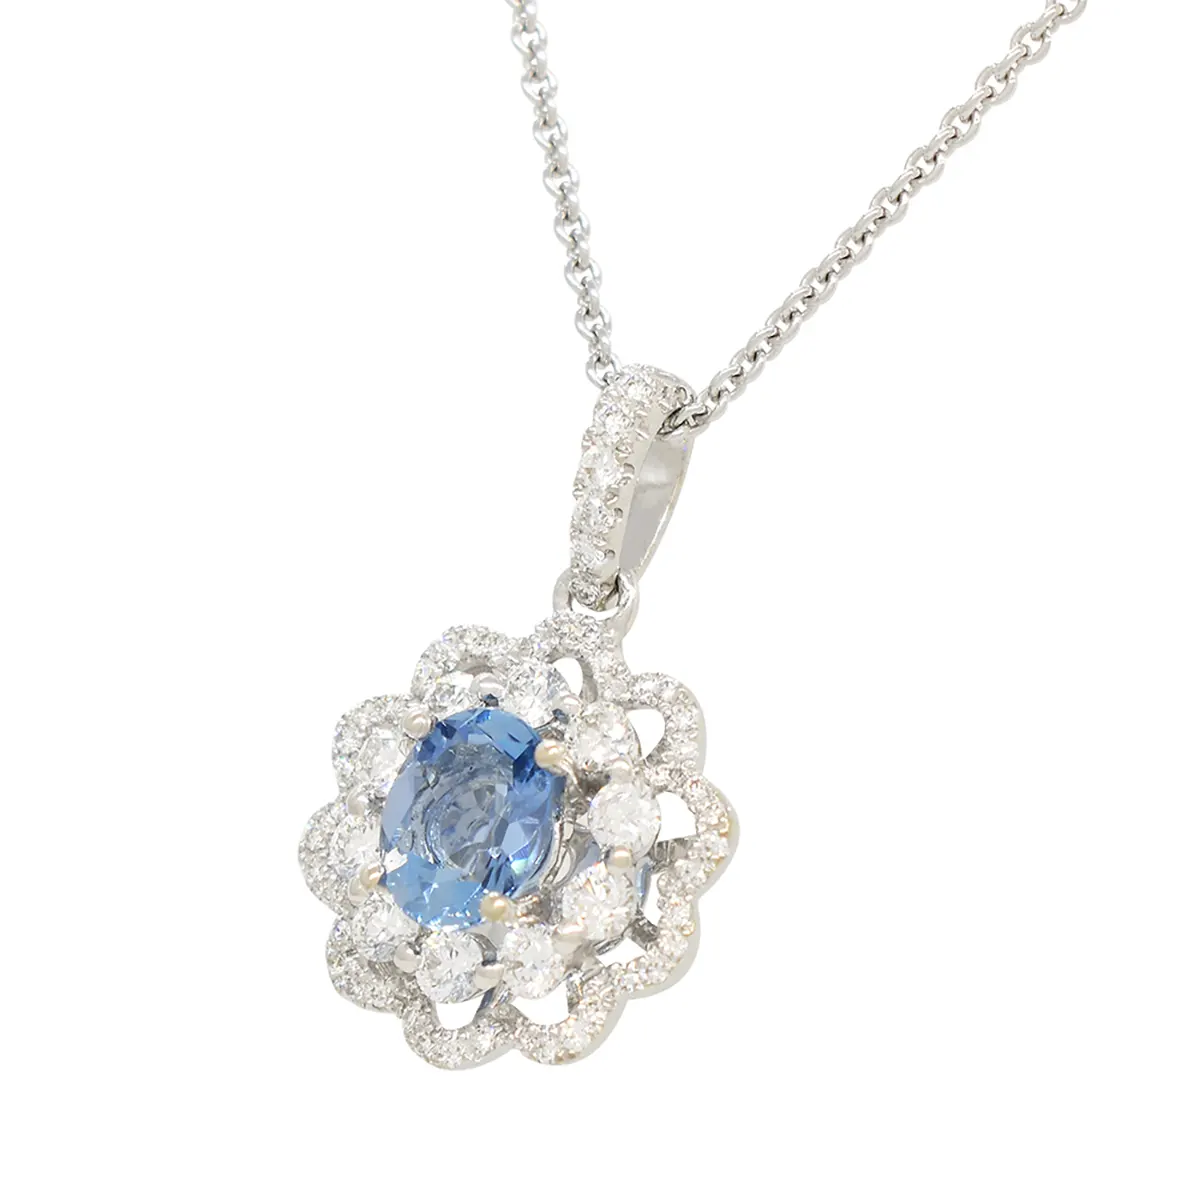 18K white gold aquamarine and diamond pendant necklace with oval shape high quality aquamarine and genuine round diamonds angle view